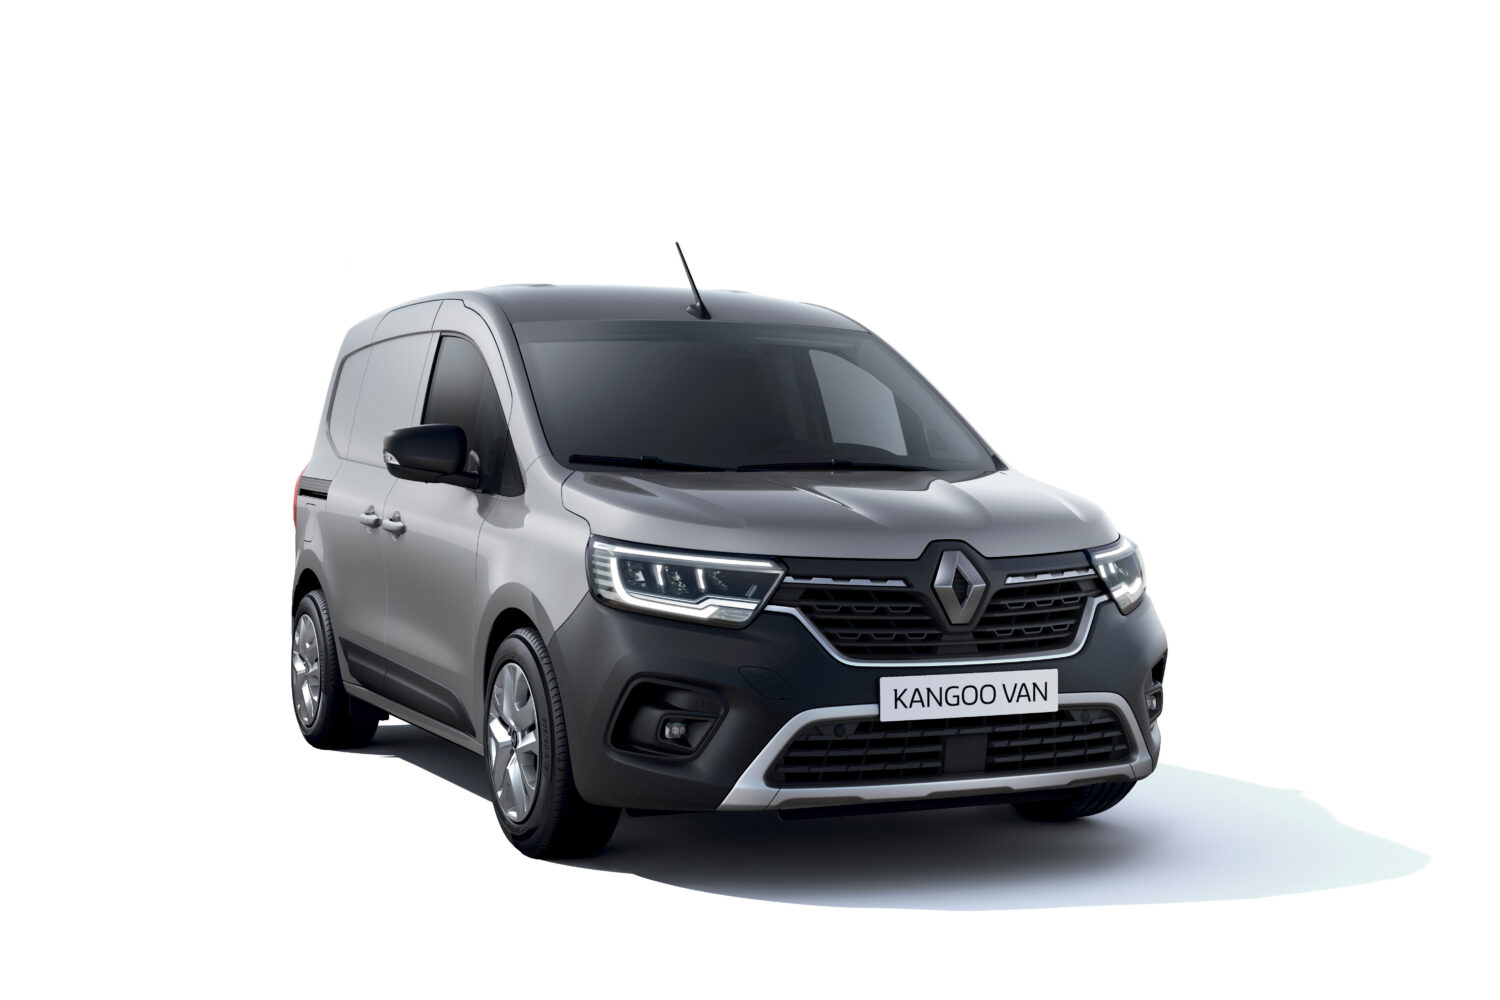 2021 - New Renault Kangoo Van in studio..jpeg